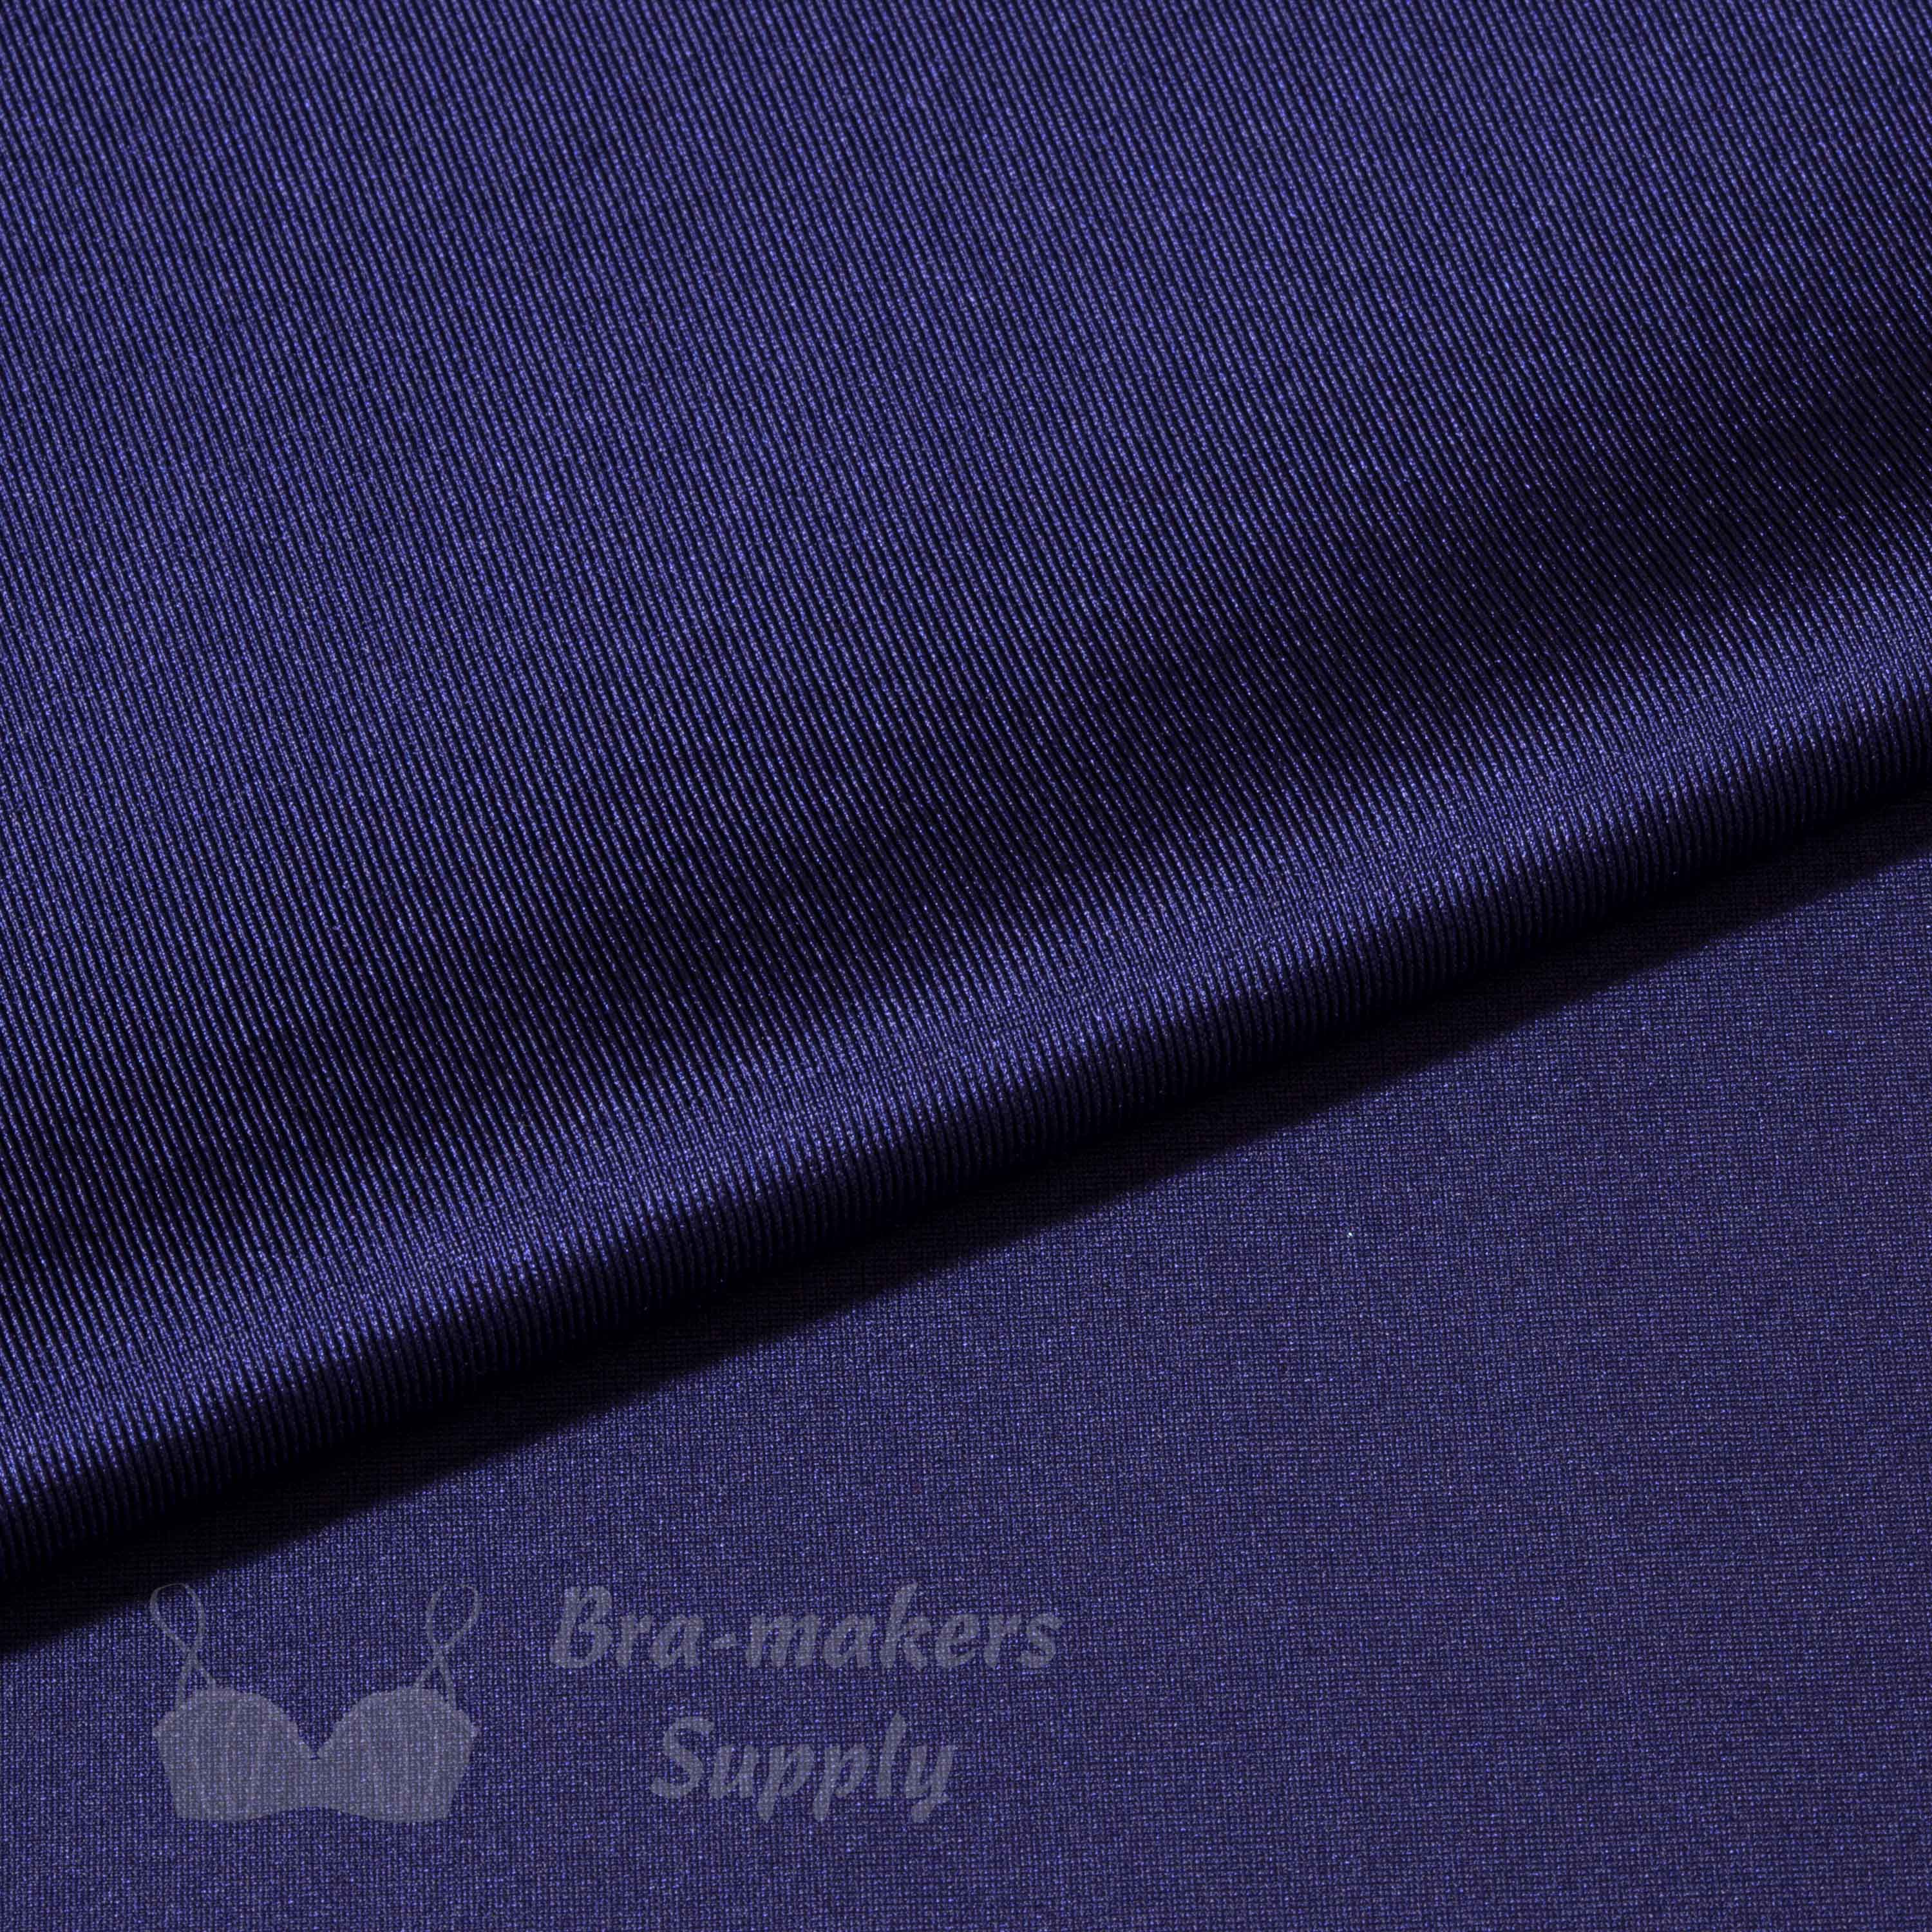 double knit power net FP-3 navy blue bra band fabric Pantone 19-3939 blueprint from Bra-Makers Supply flat fold shown